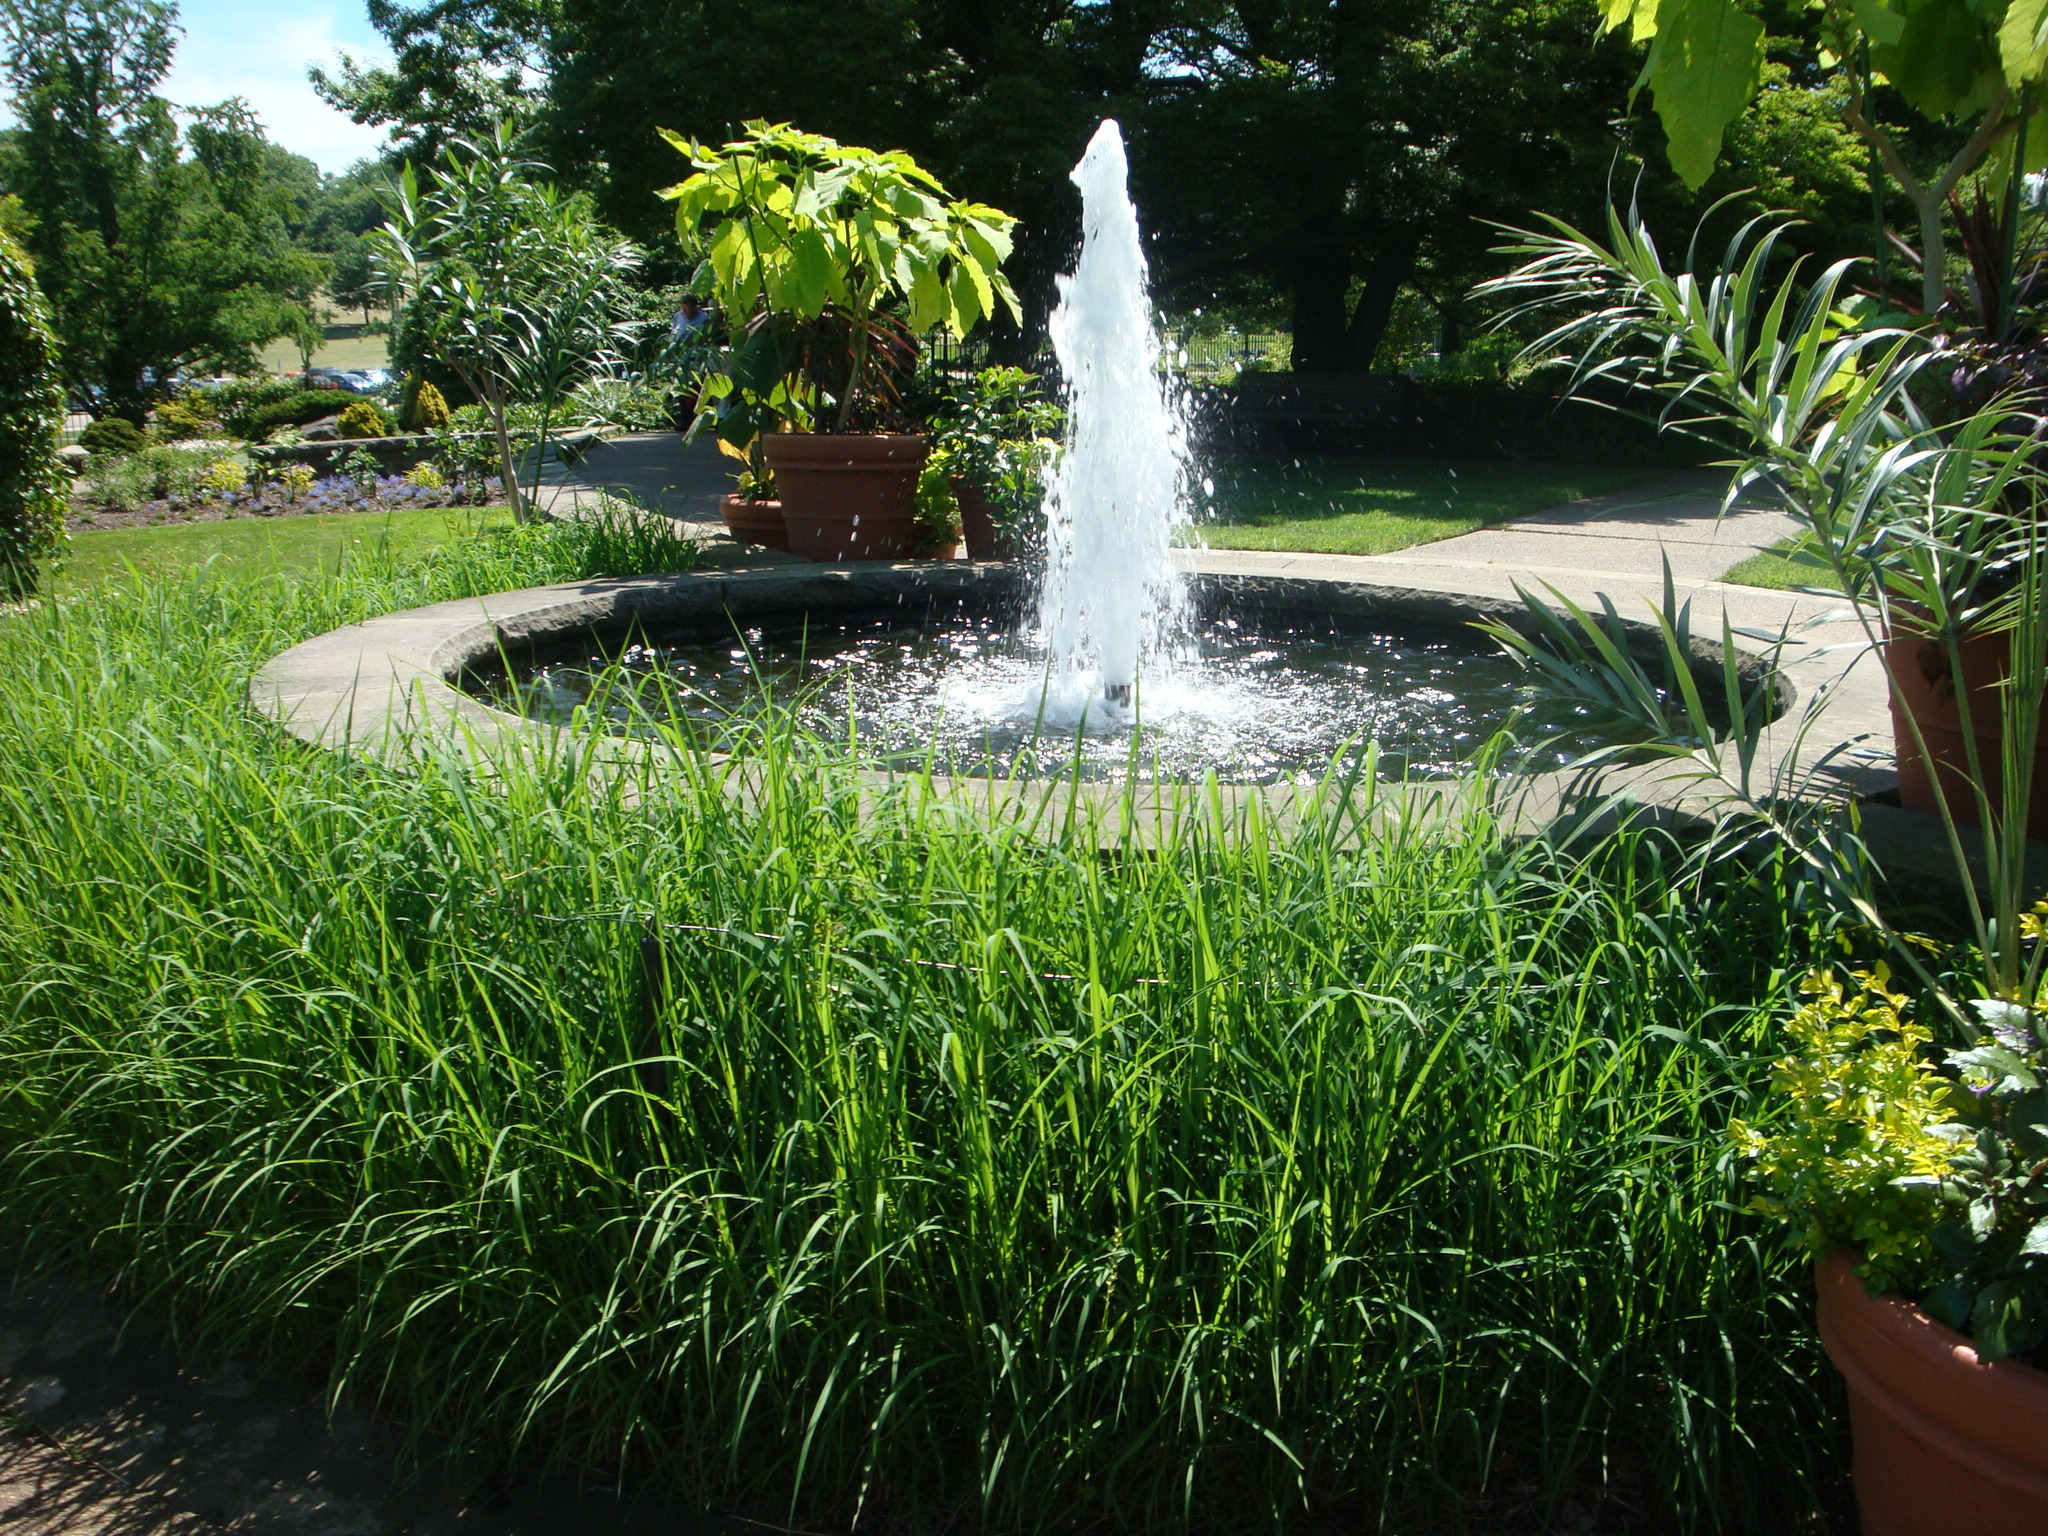 Formal Water Features in Landscape Design - Revolutionary Gardens